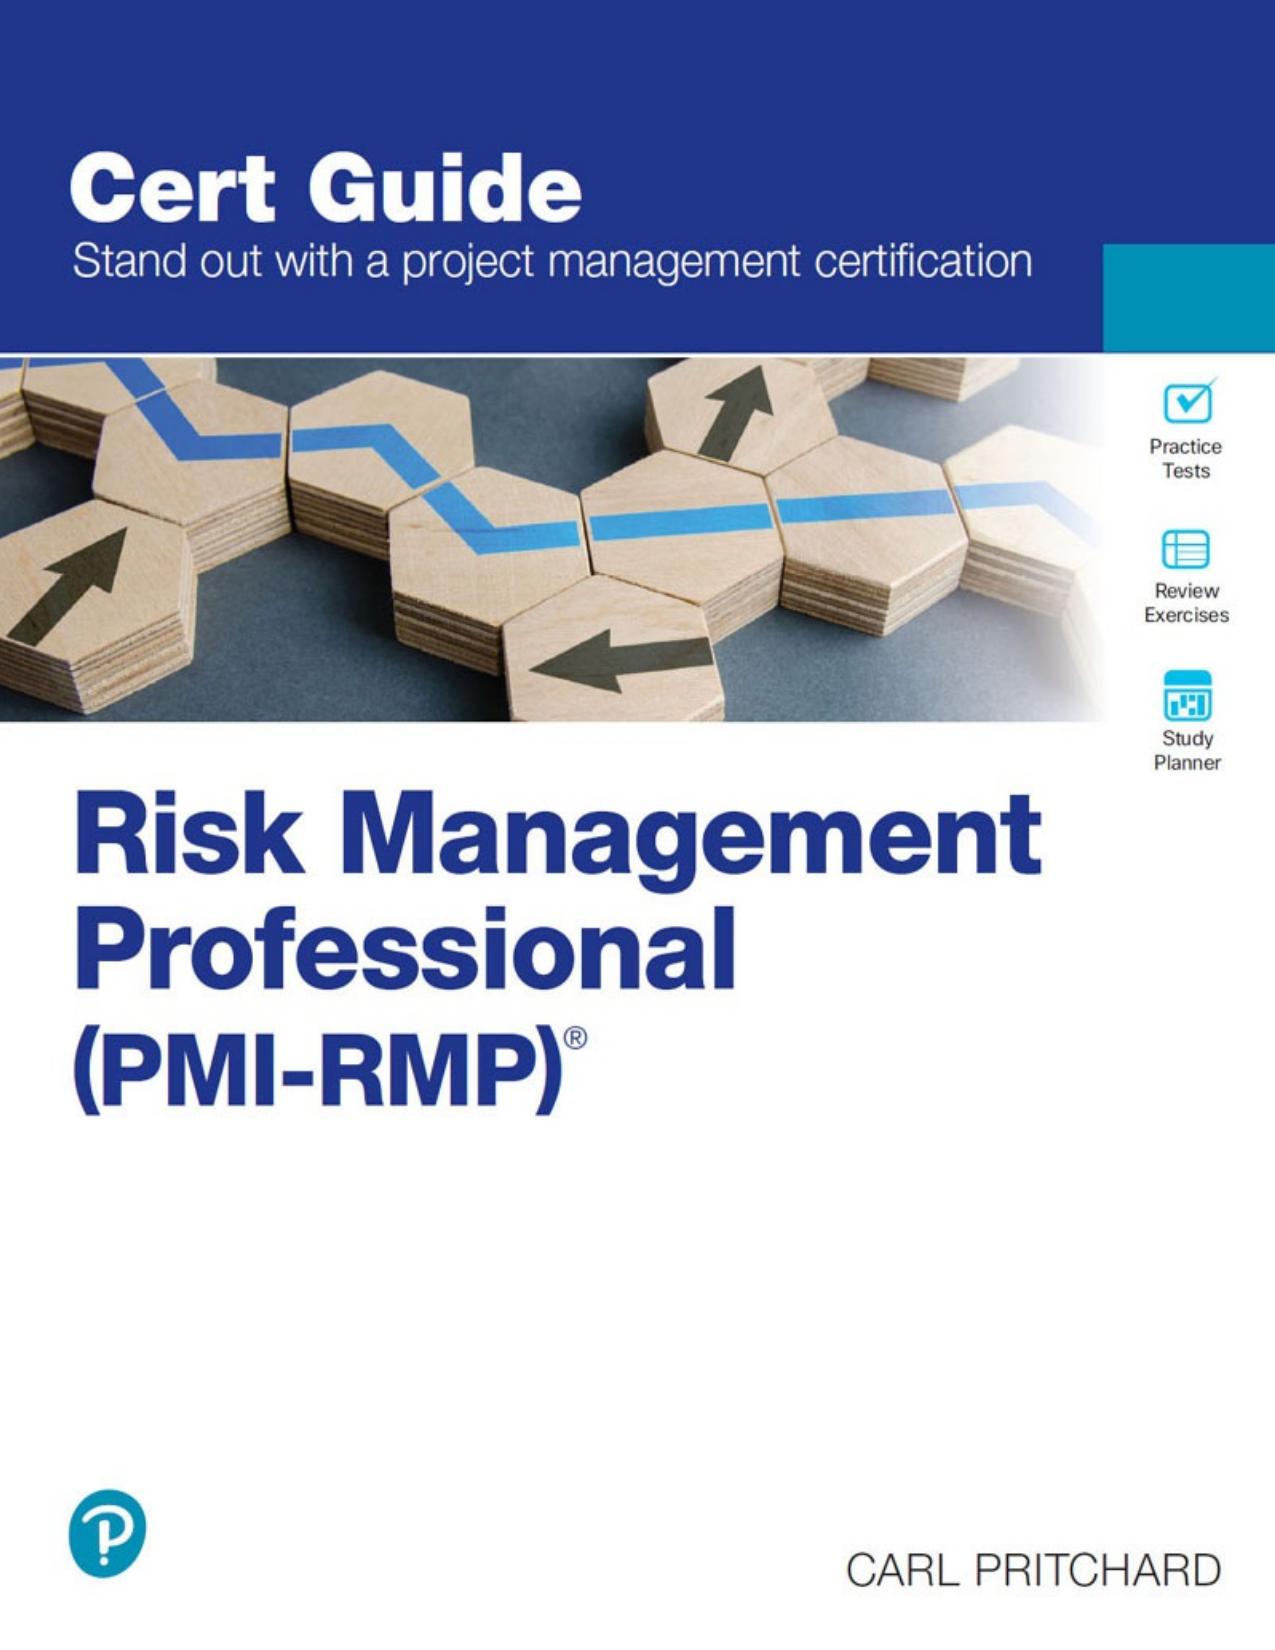 PMI-RMP (Risk Management Professional)